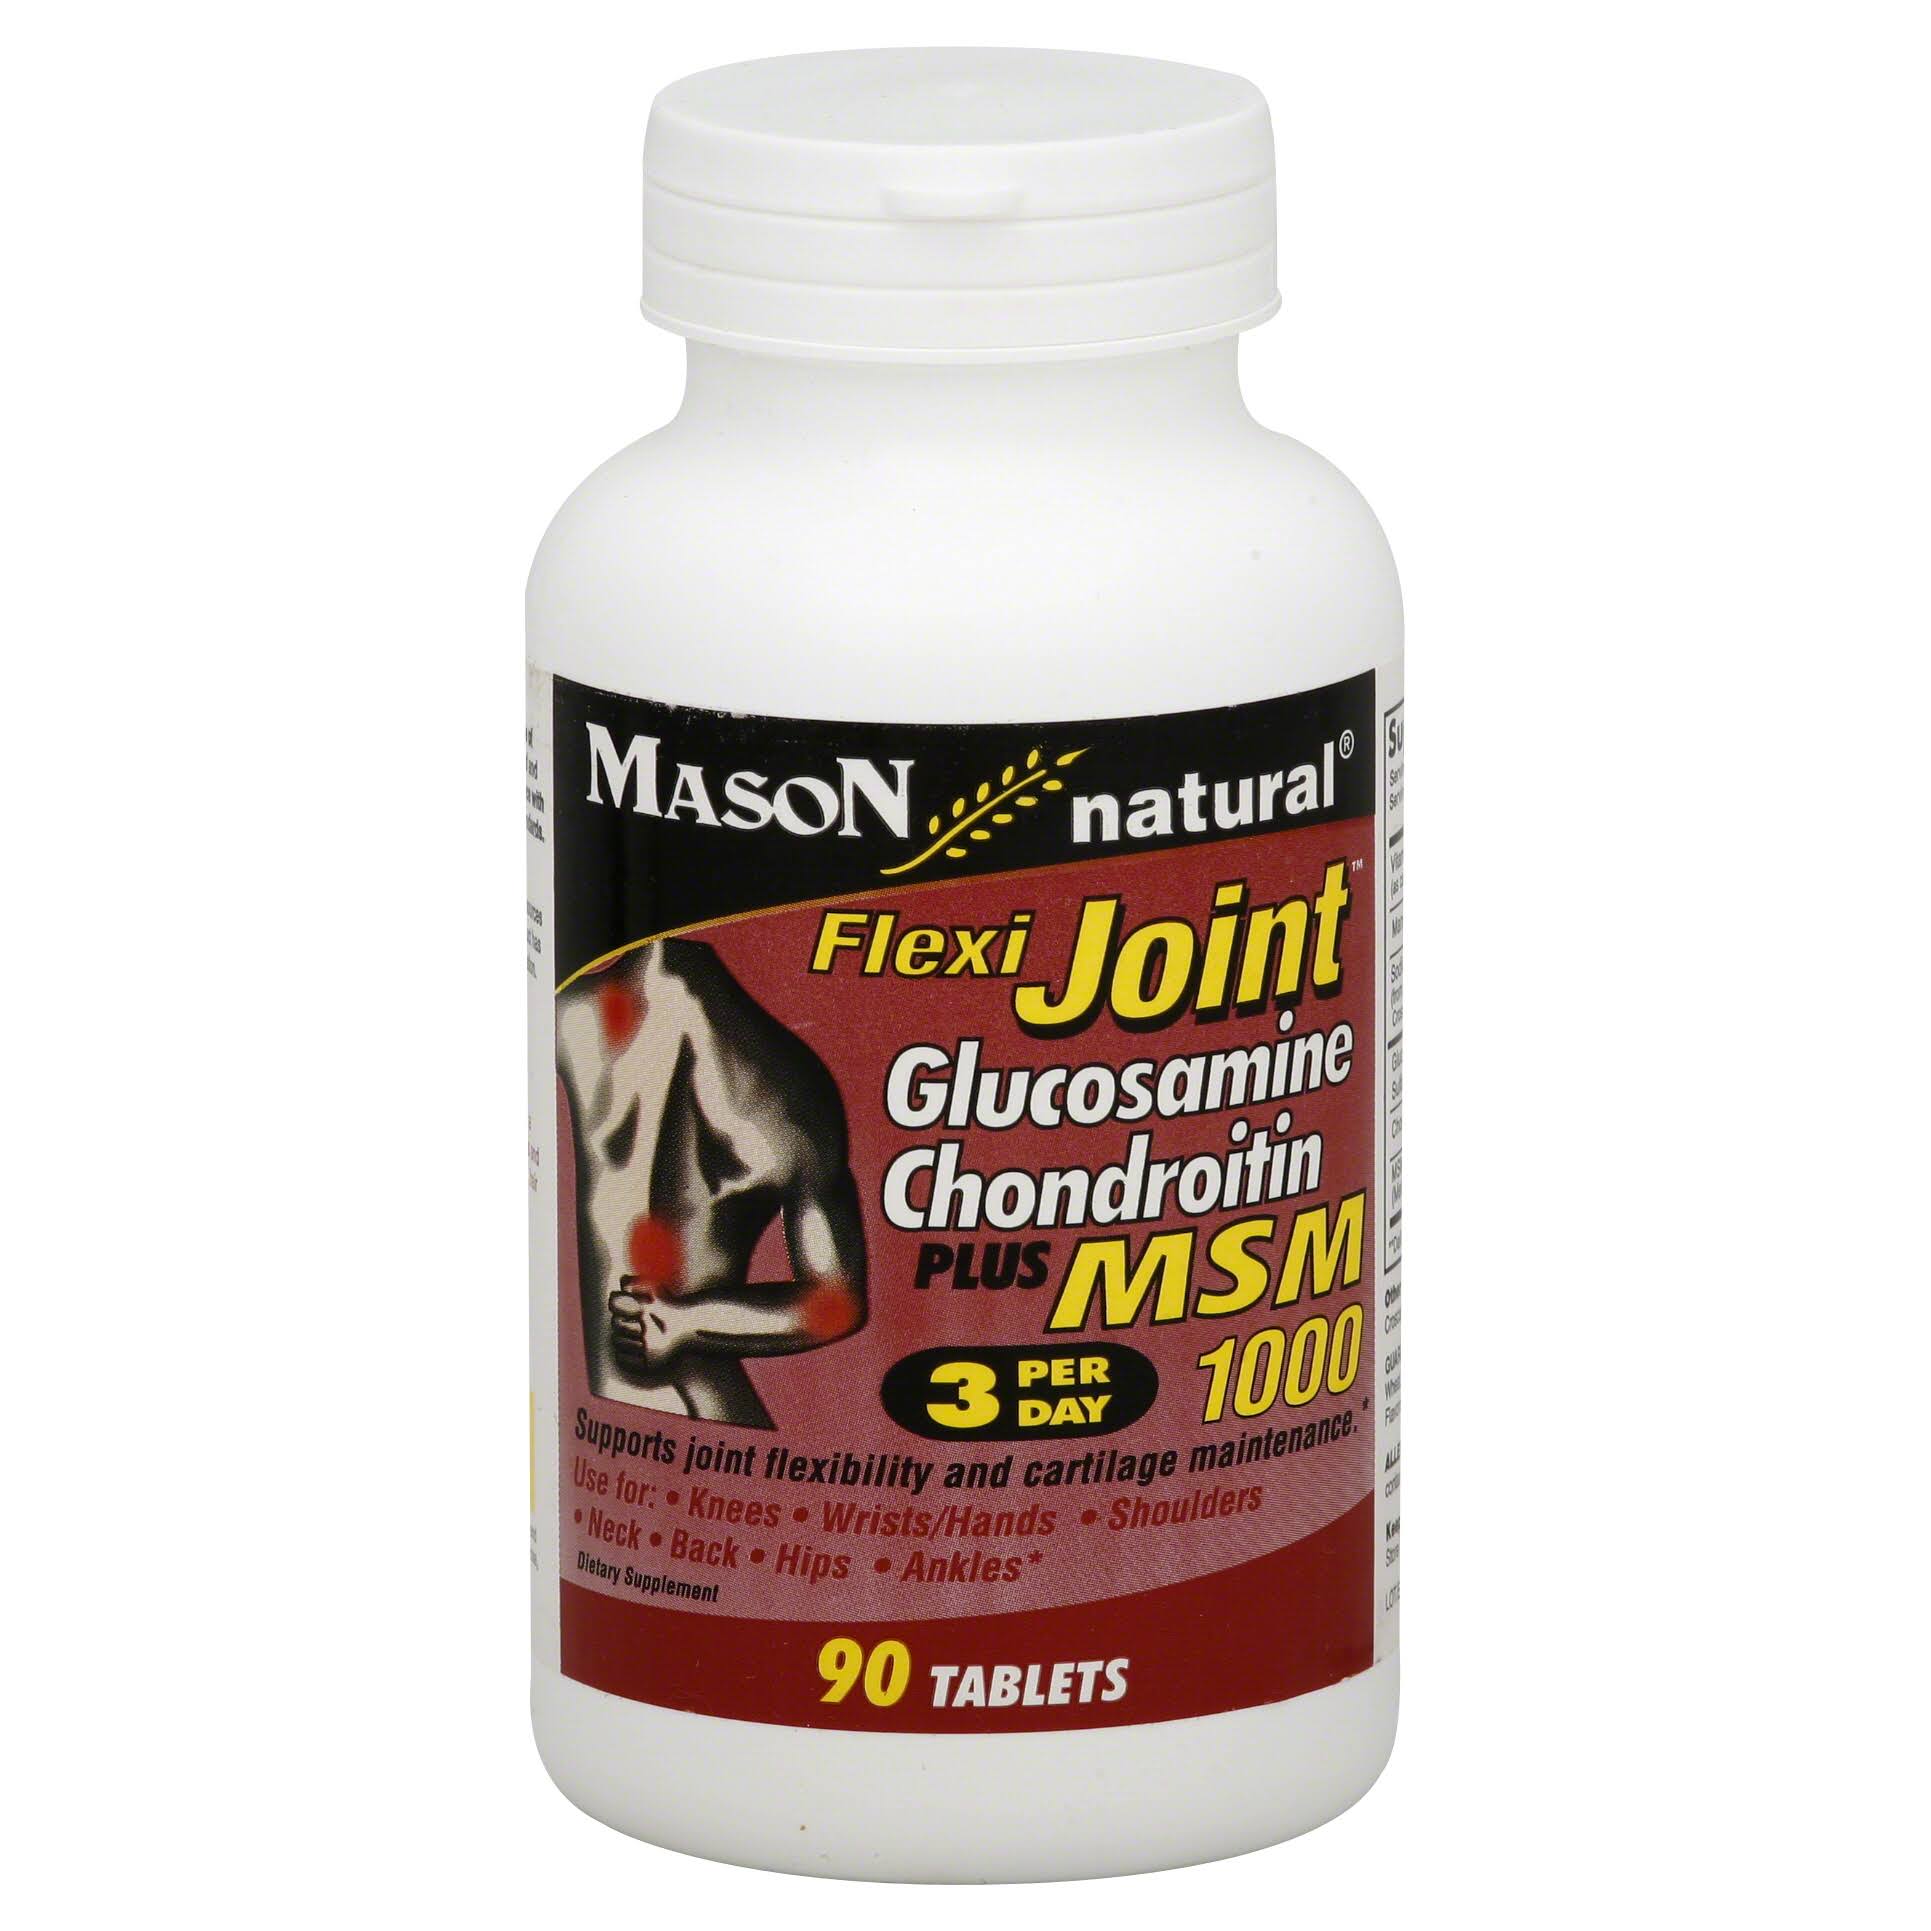 Mason Natural Flexi-Joint Glucosamine / Chondroitin Plus MSM 1000 Tablets - x90